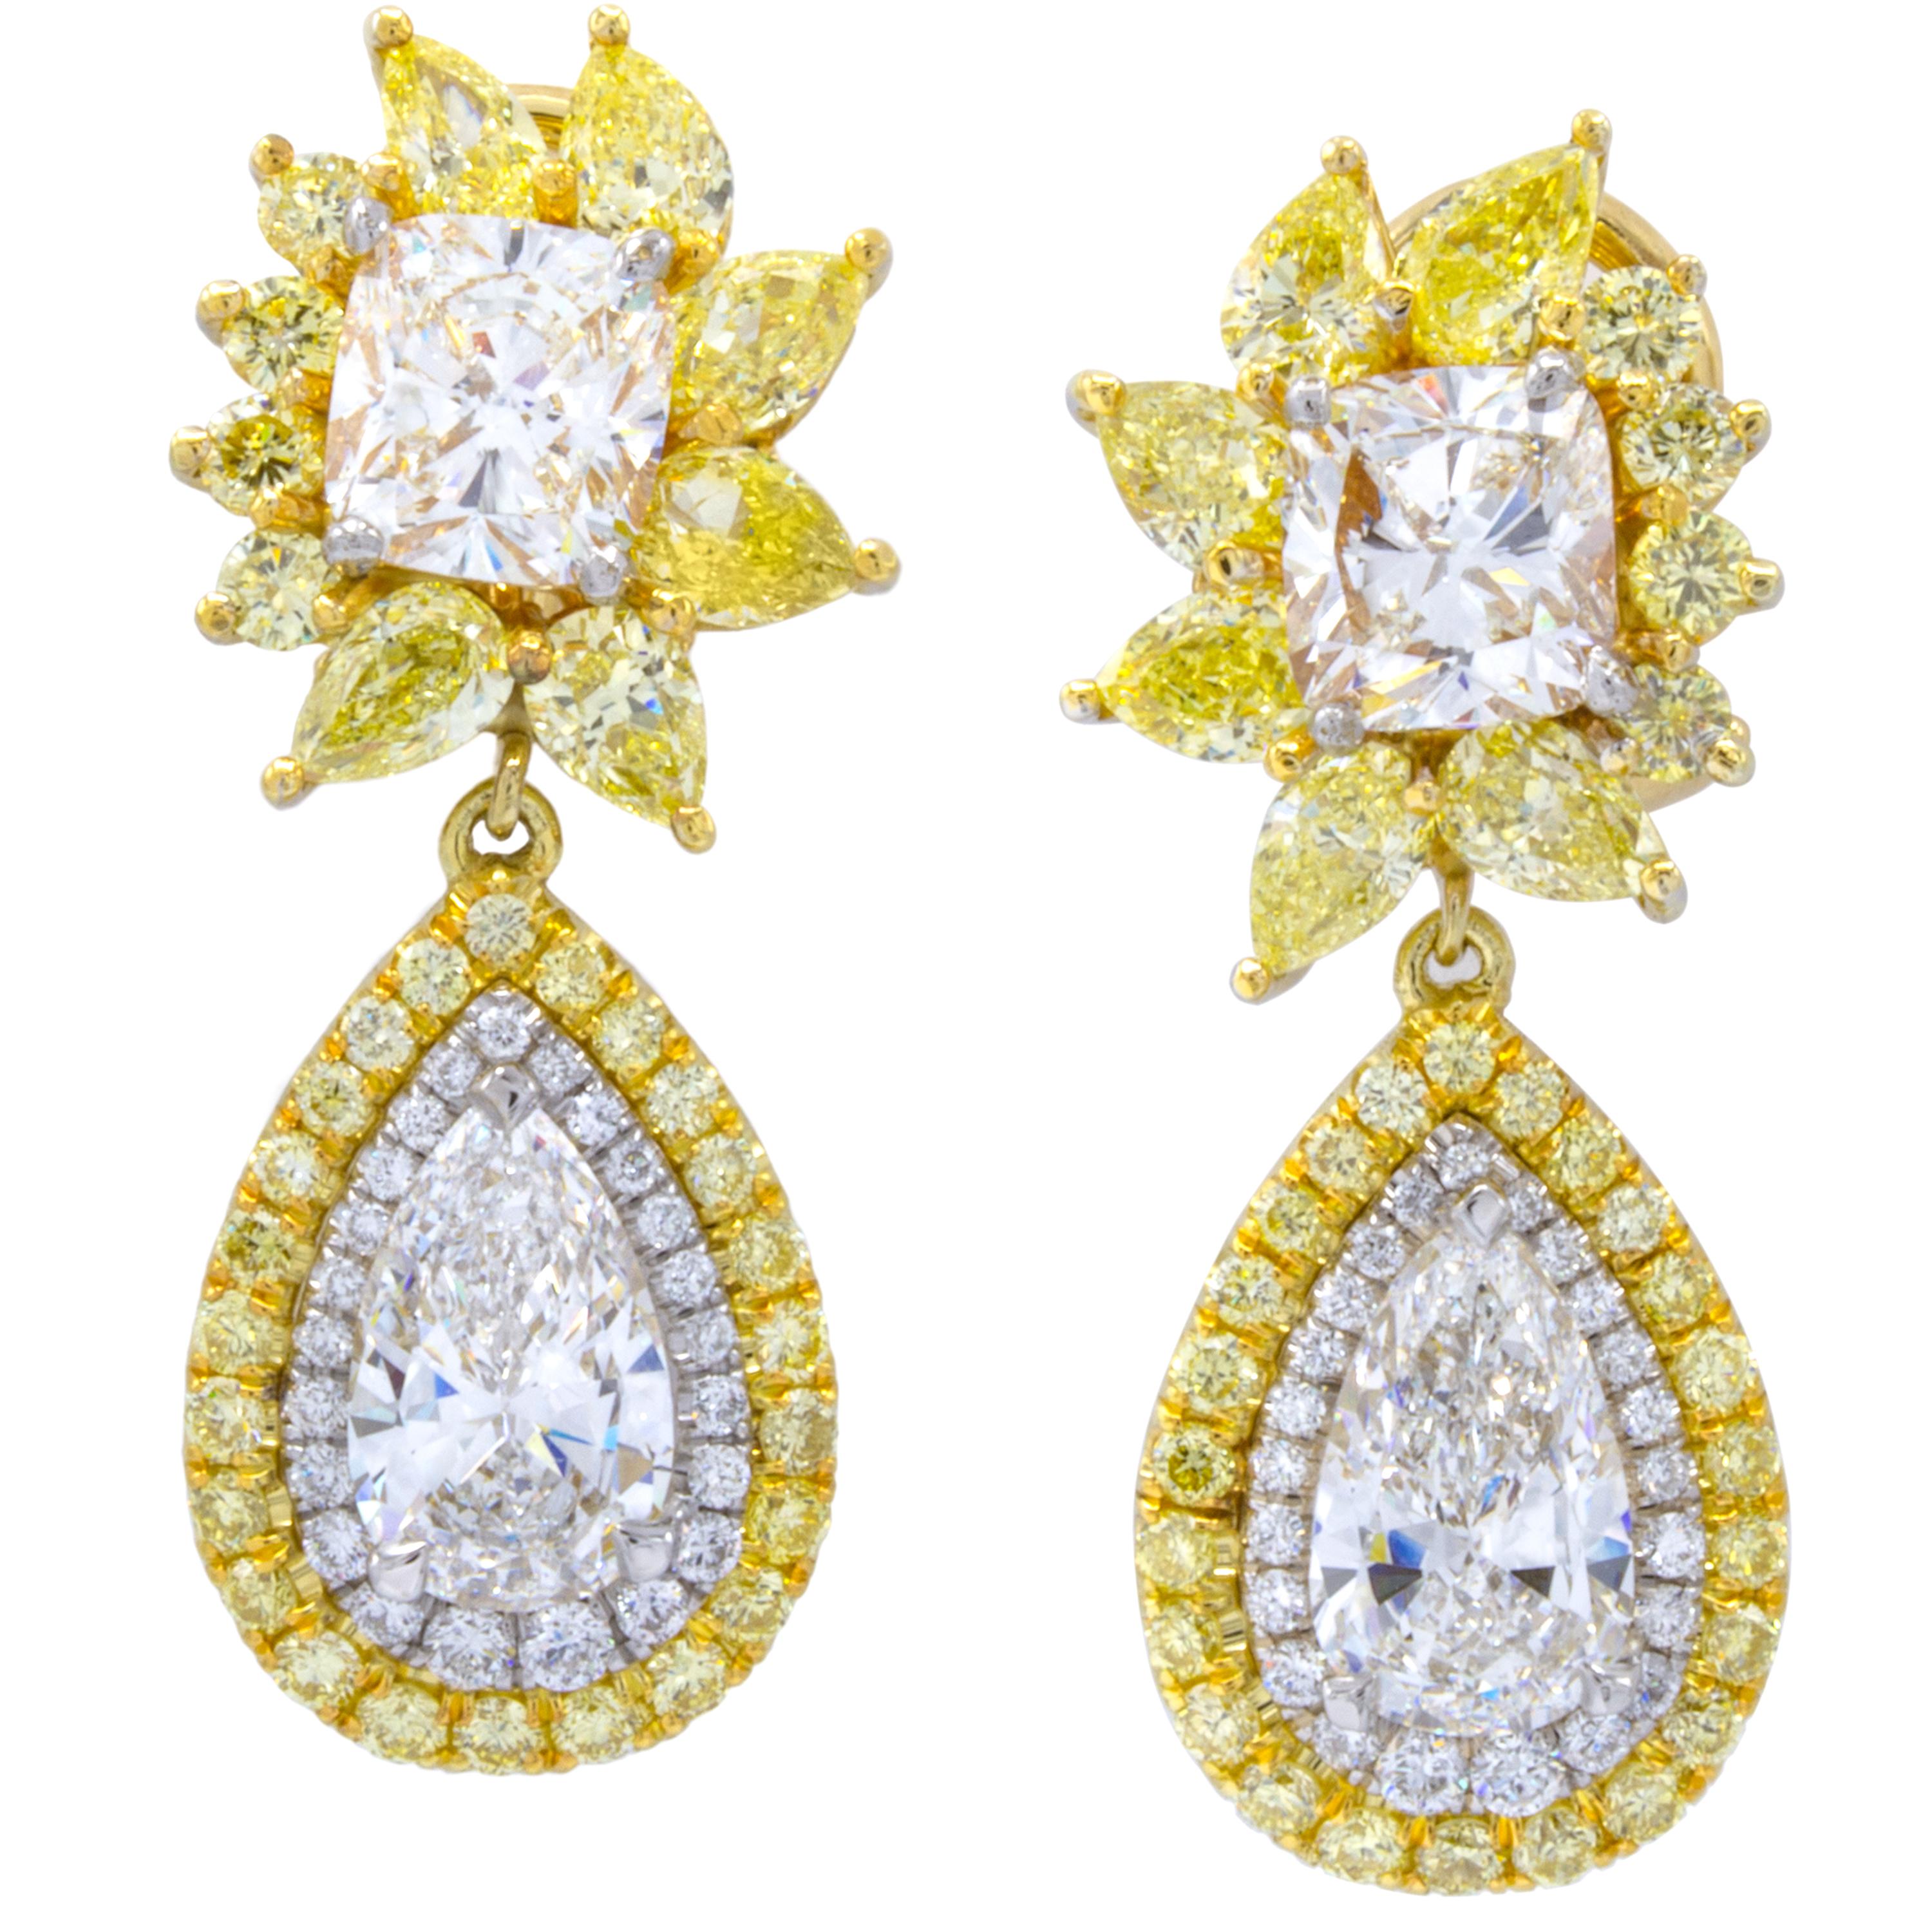 David Rosenberg 2.98 Carat Pear & Cushion Shape White/Yellow Diamond Earrings